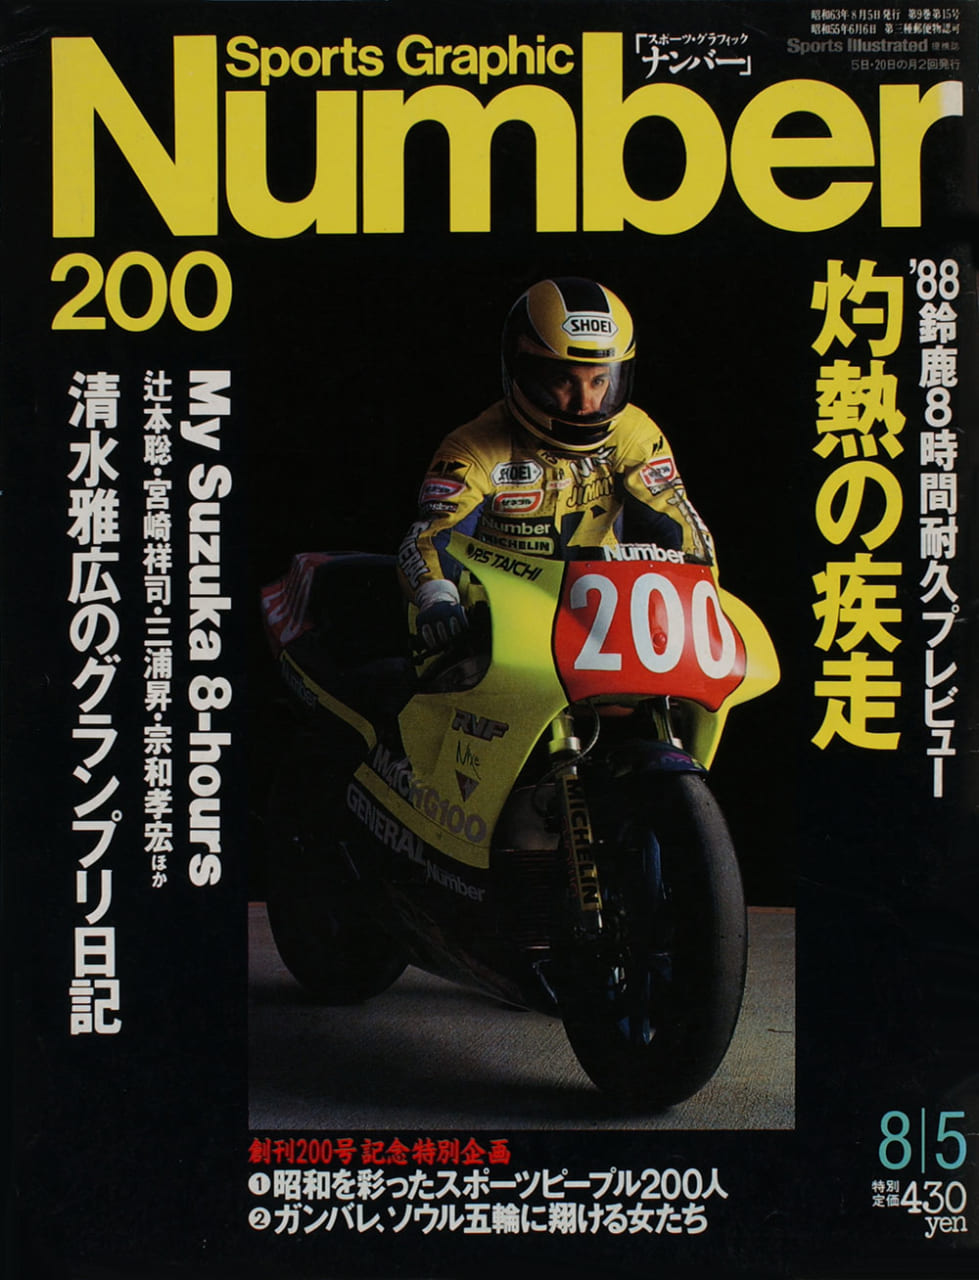 Sports Graphic Number 200号
1988年7月20日発売
表紙撮影：檢見﨑誠